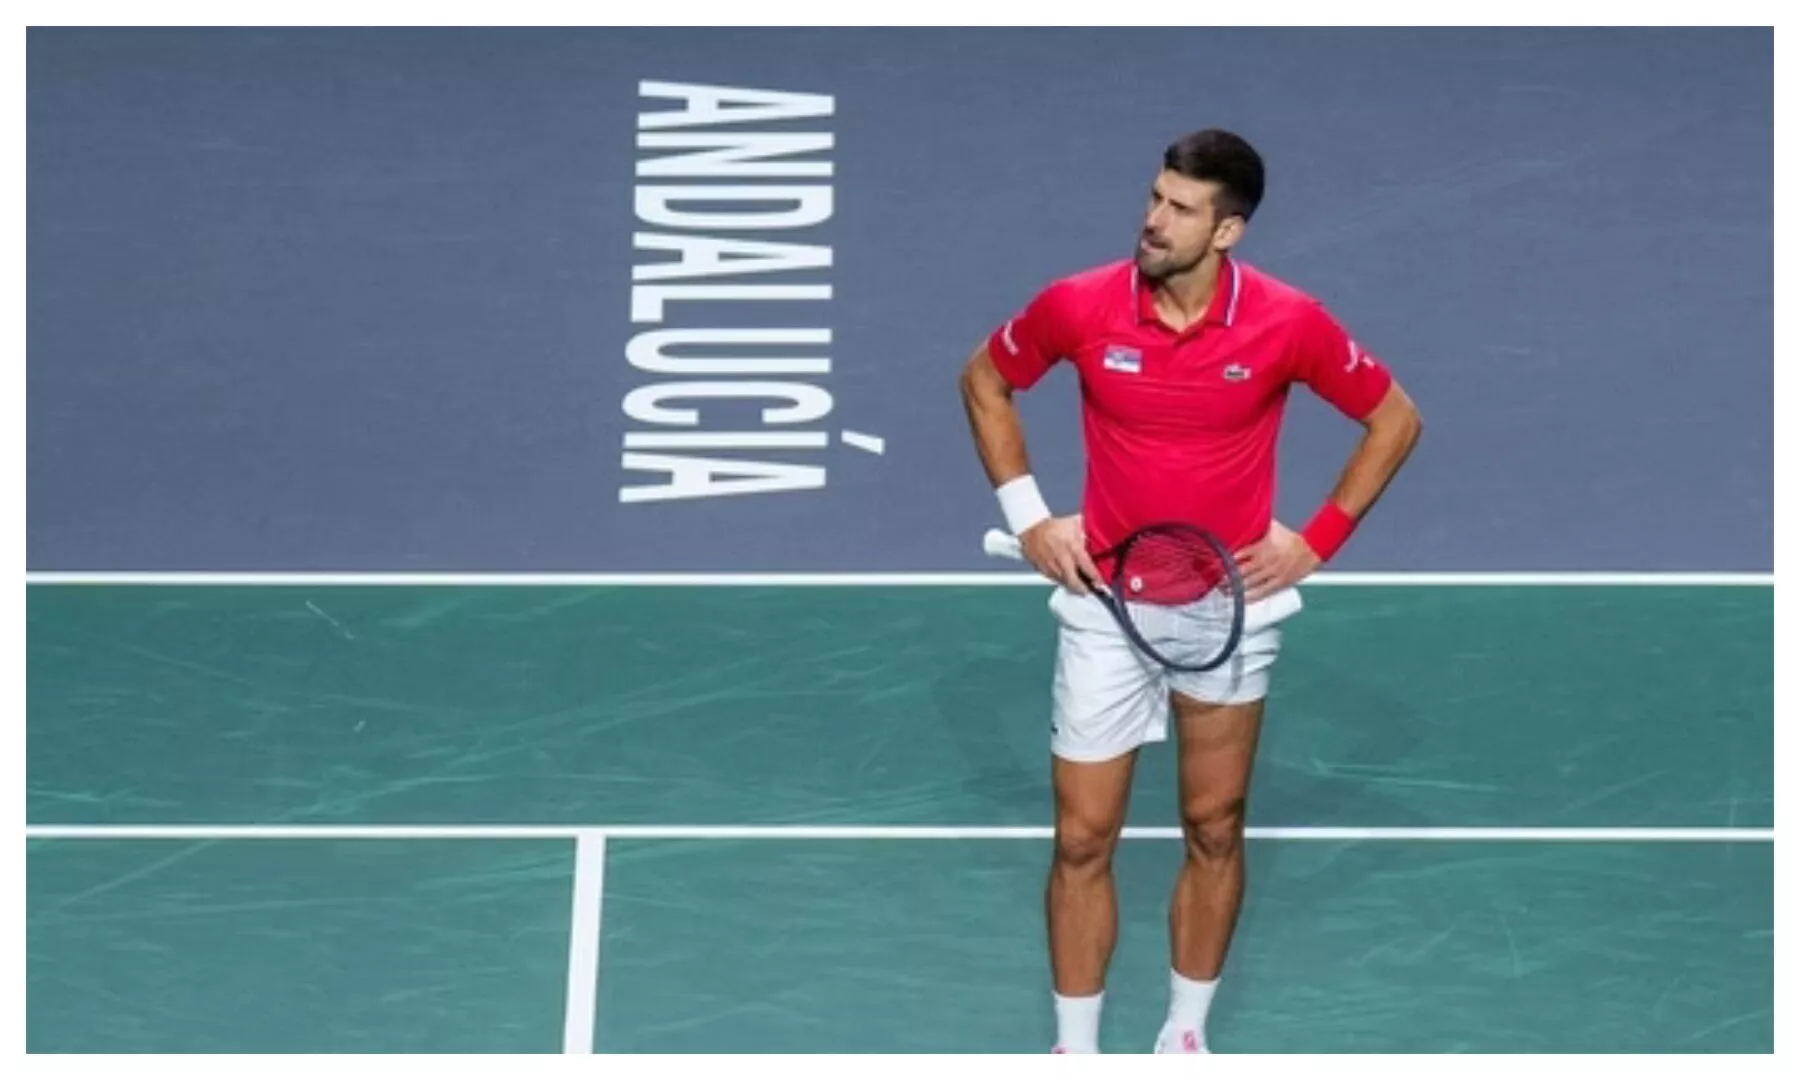 Novak Djokovic fumes over request to undergo doping test prior to Davis Cup tie